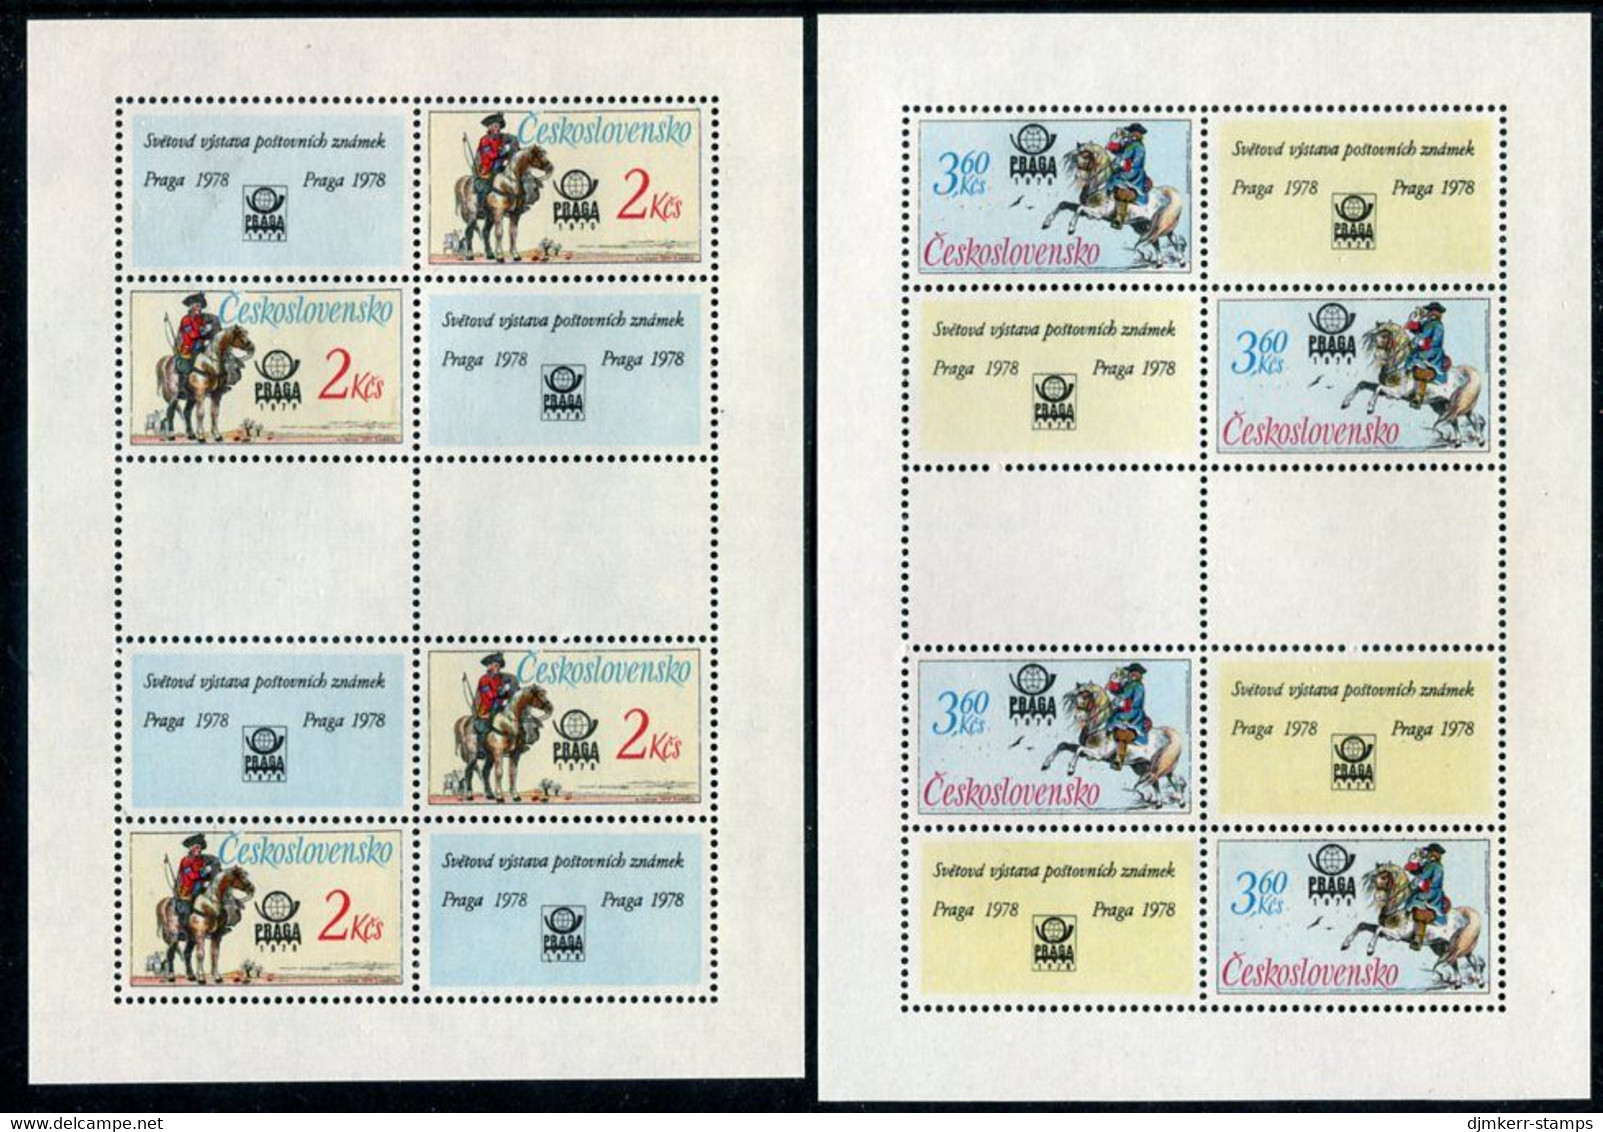 CZECHOSLOVAKIA 1977 Postal Uniforms Sheetlets MNH, Michel 2377-80 Kb - Unused Stamps